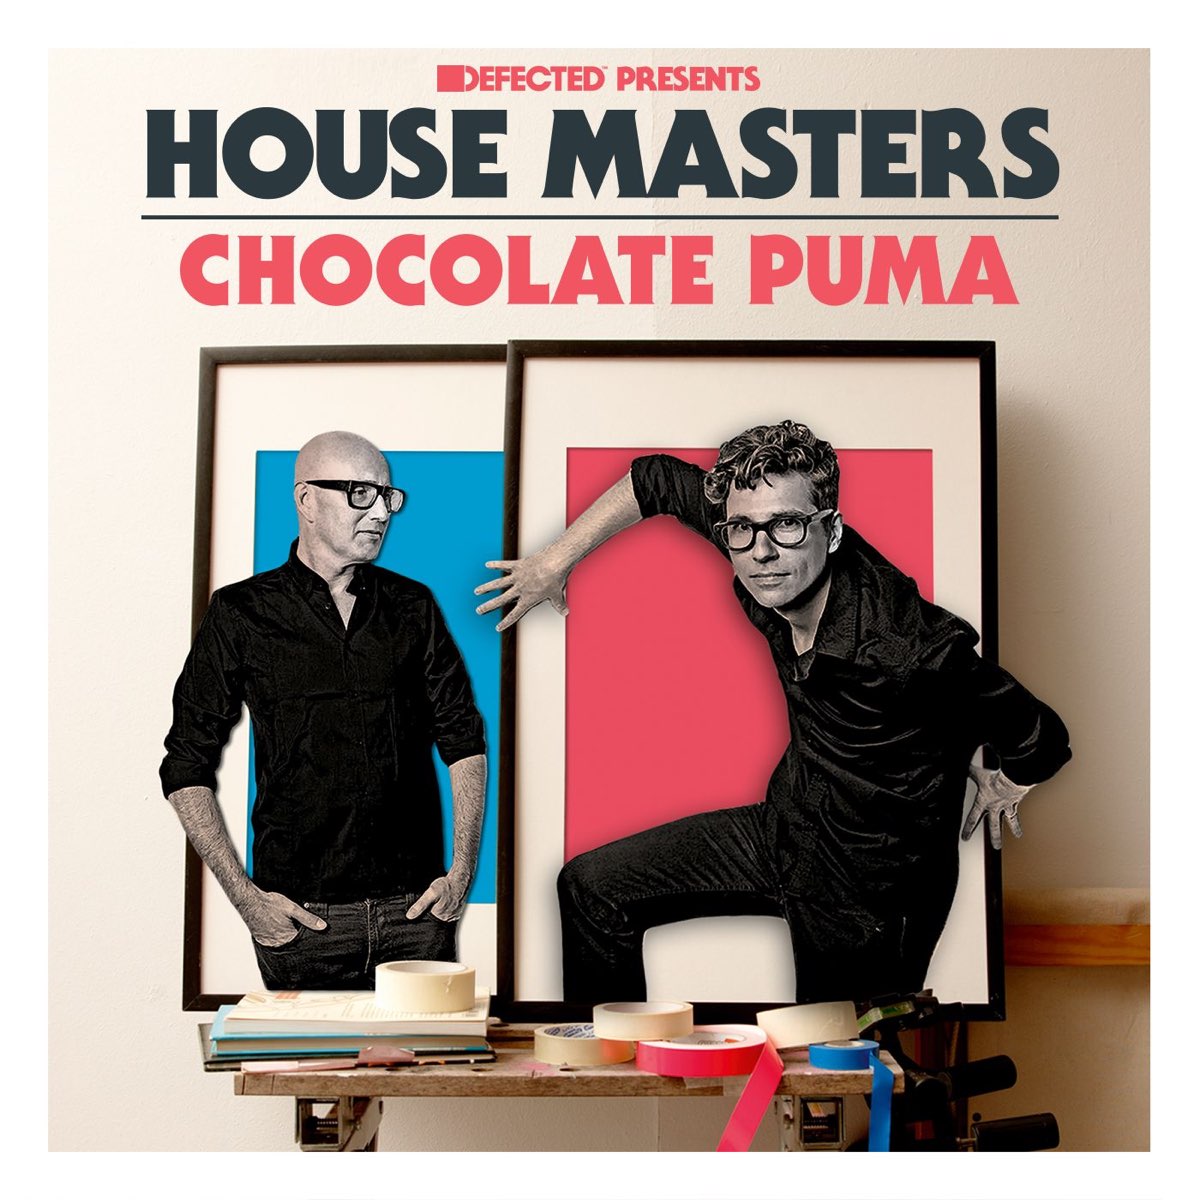 Various Artistsの「Defected Presents House Masters - Chocolate Puma」をiTunesで